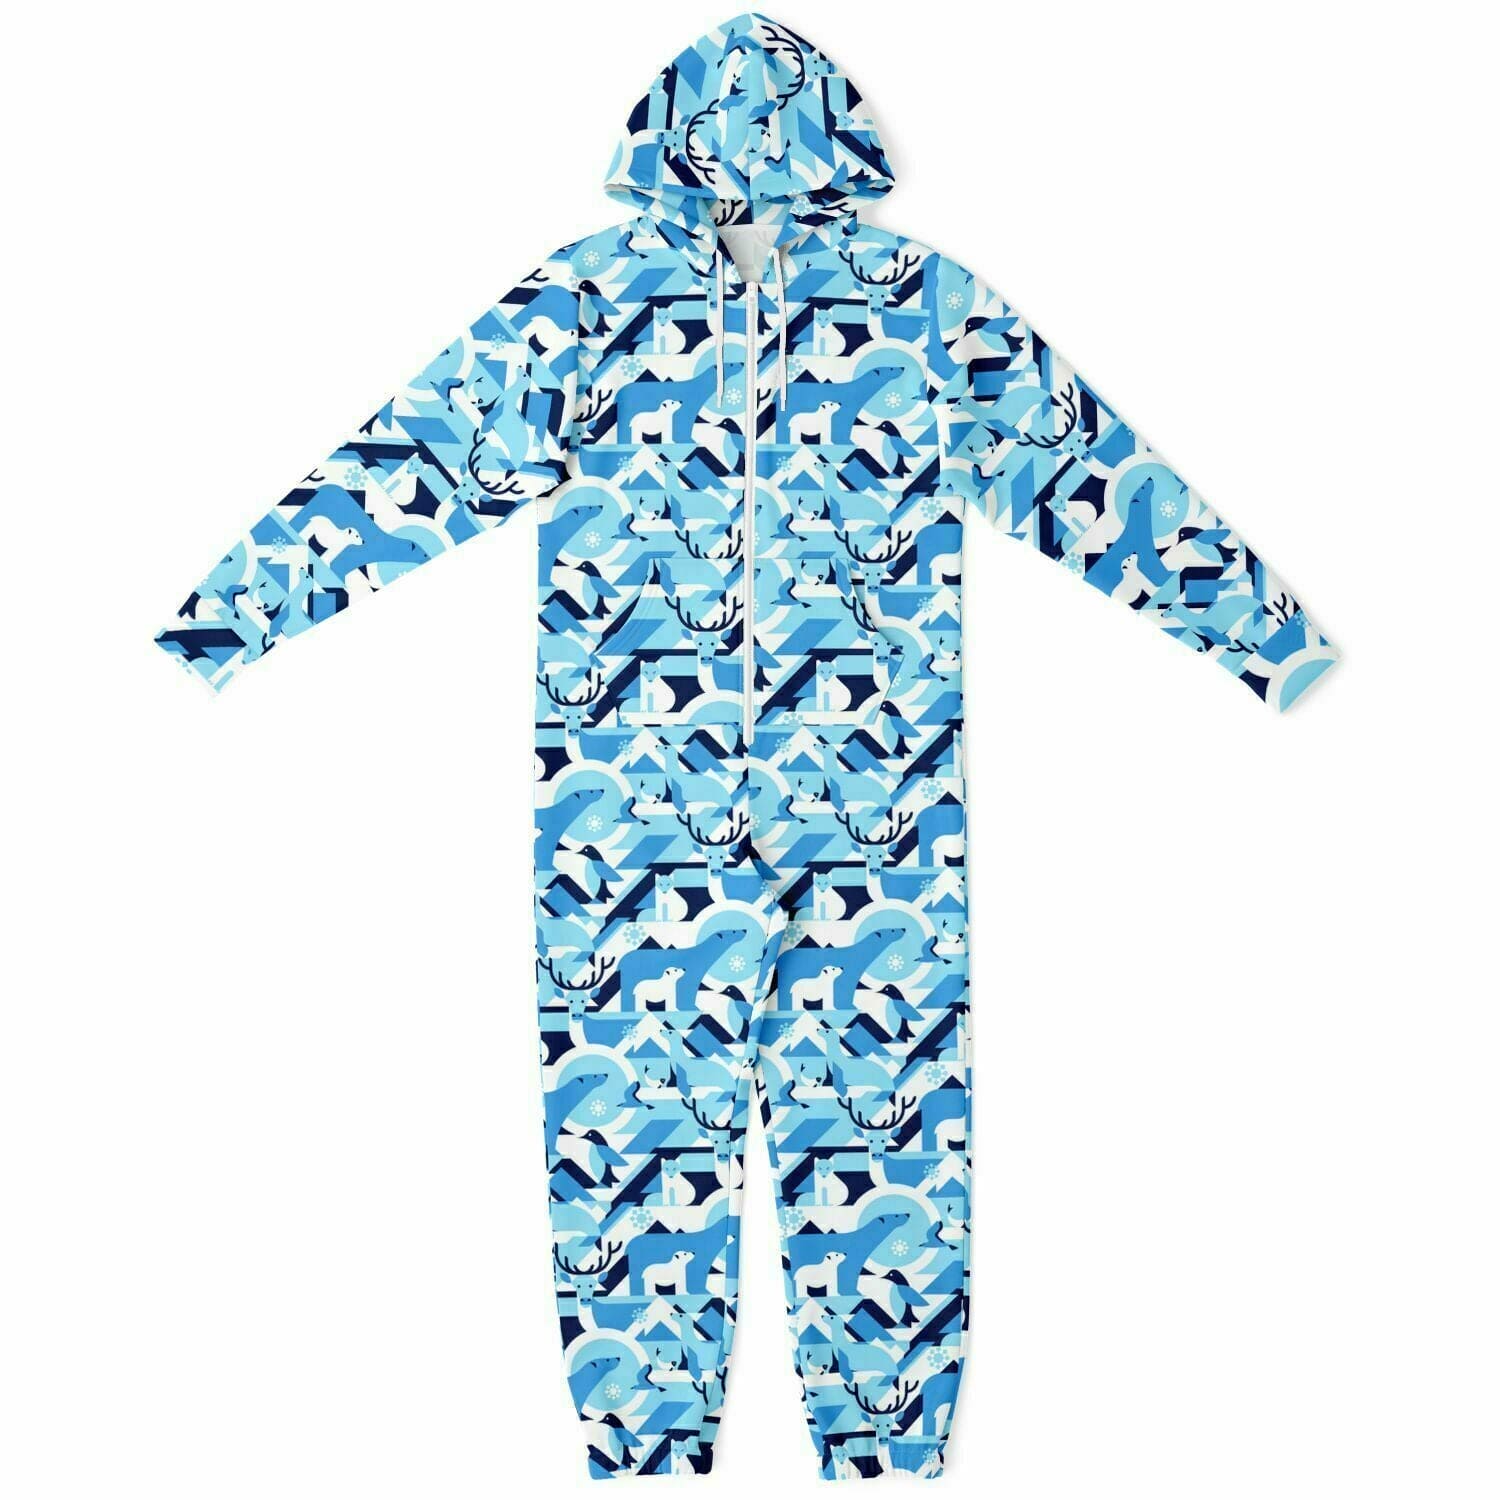 Winter Wildlife Blue Jumpsuit Adult Onesie Unisex Athletic One-Piece PJs